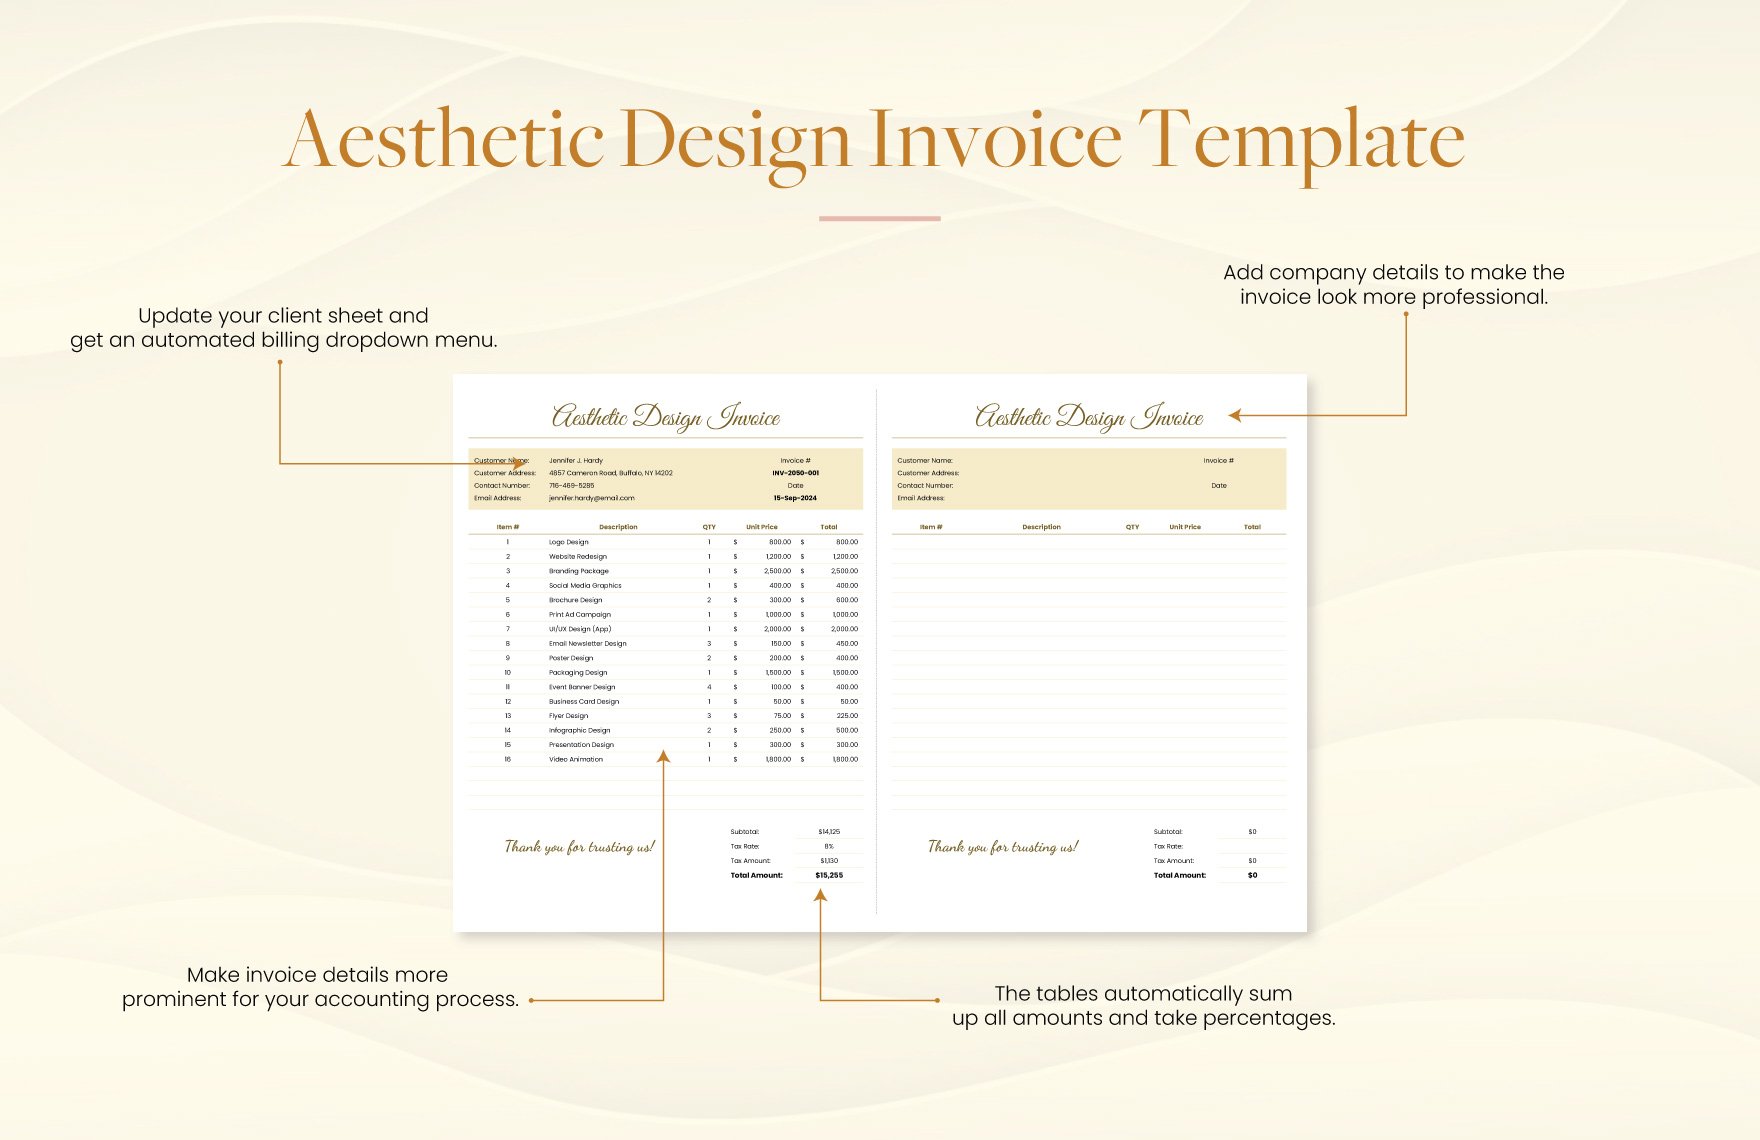 Aesthetic Design Invoice Template